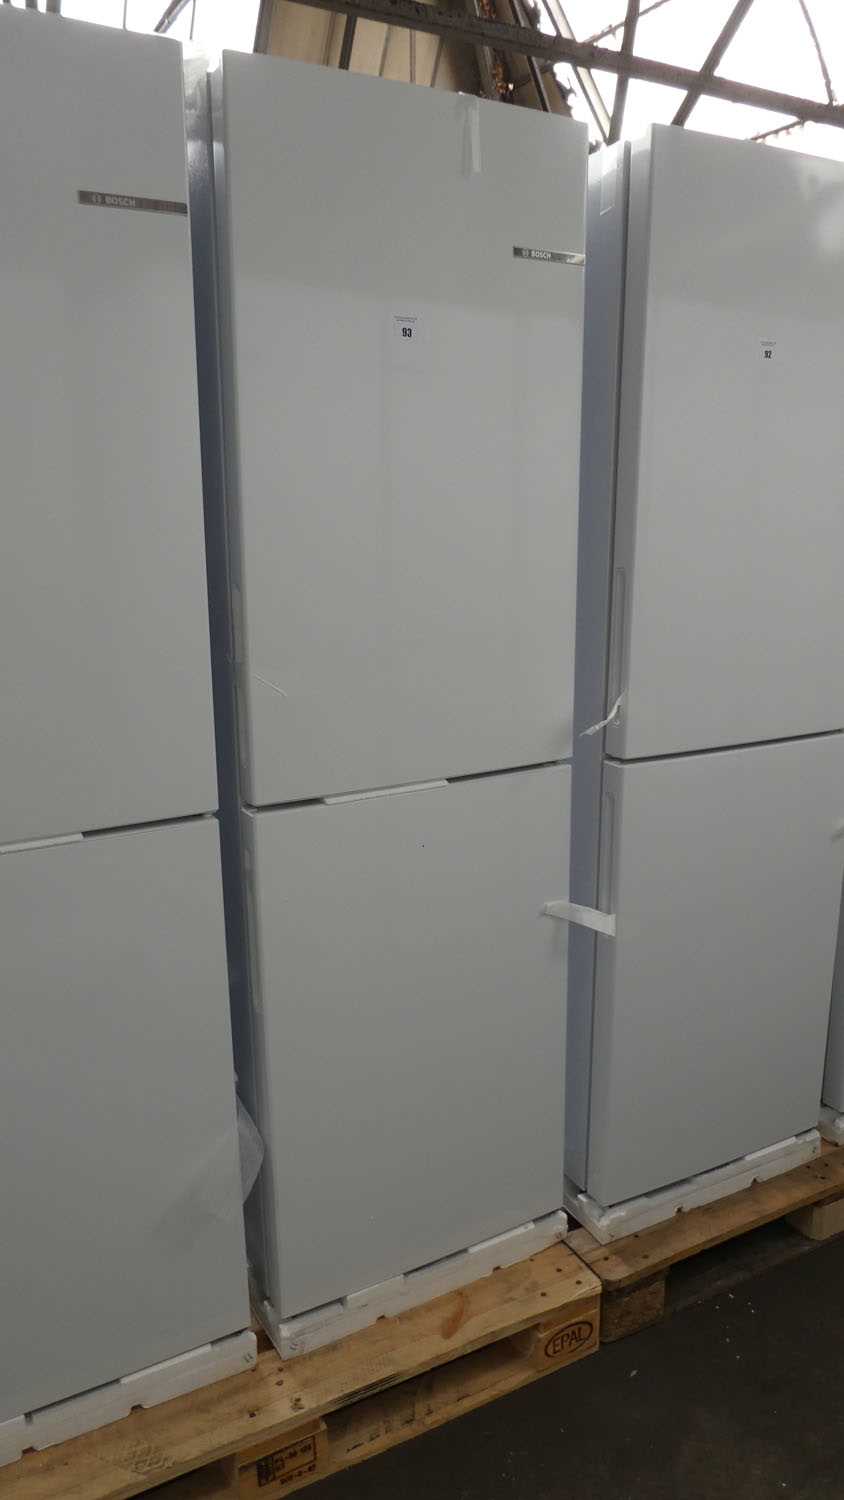 Lot 93 - KGN27NWFAGB Bosch Free-standing fridge-freezer